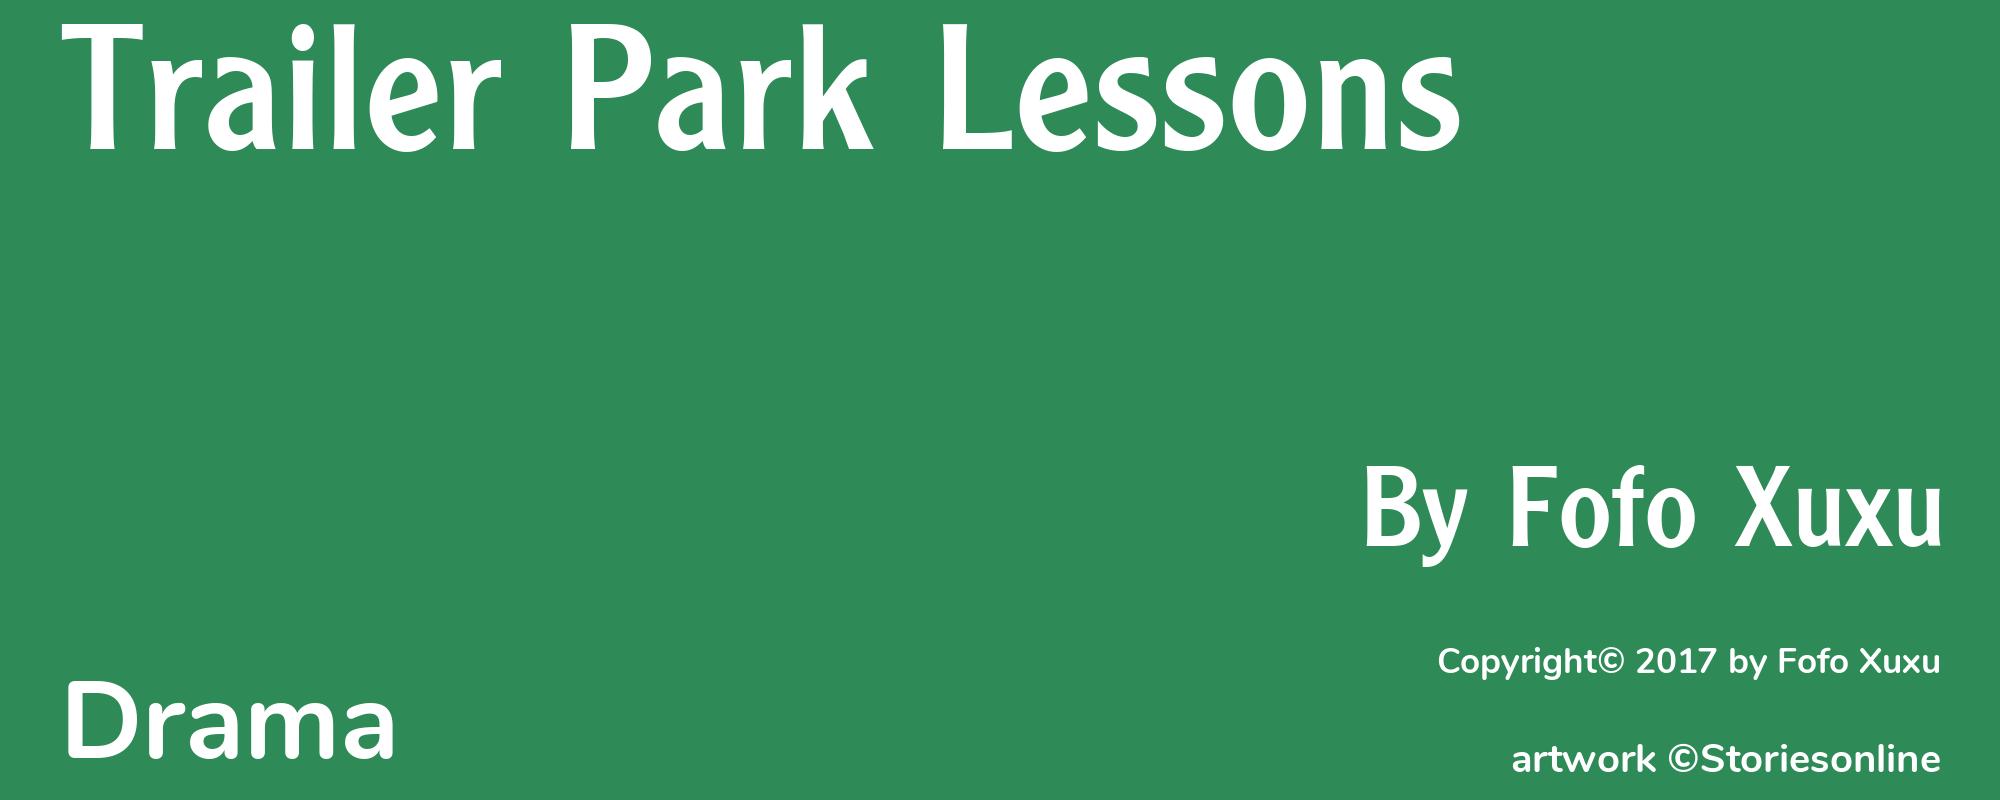 Trailer Park Lessons - Cover